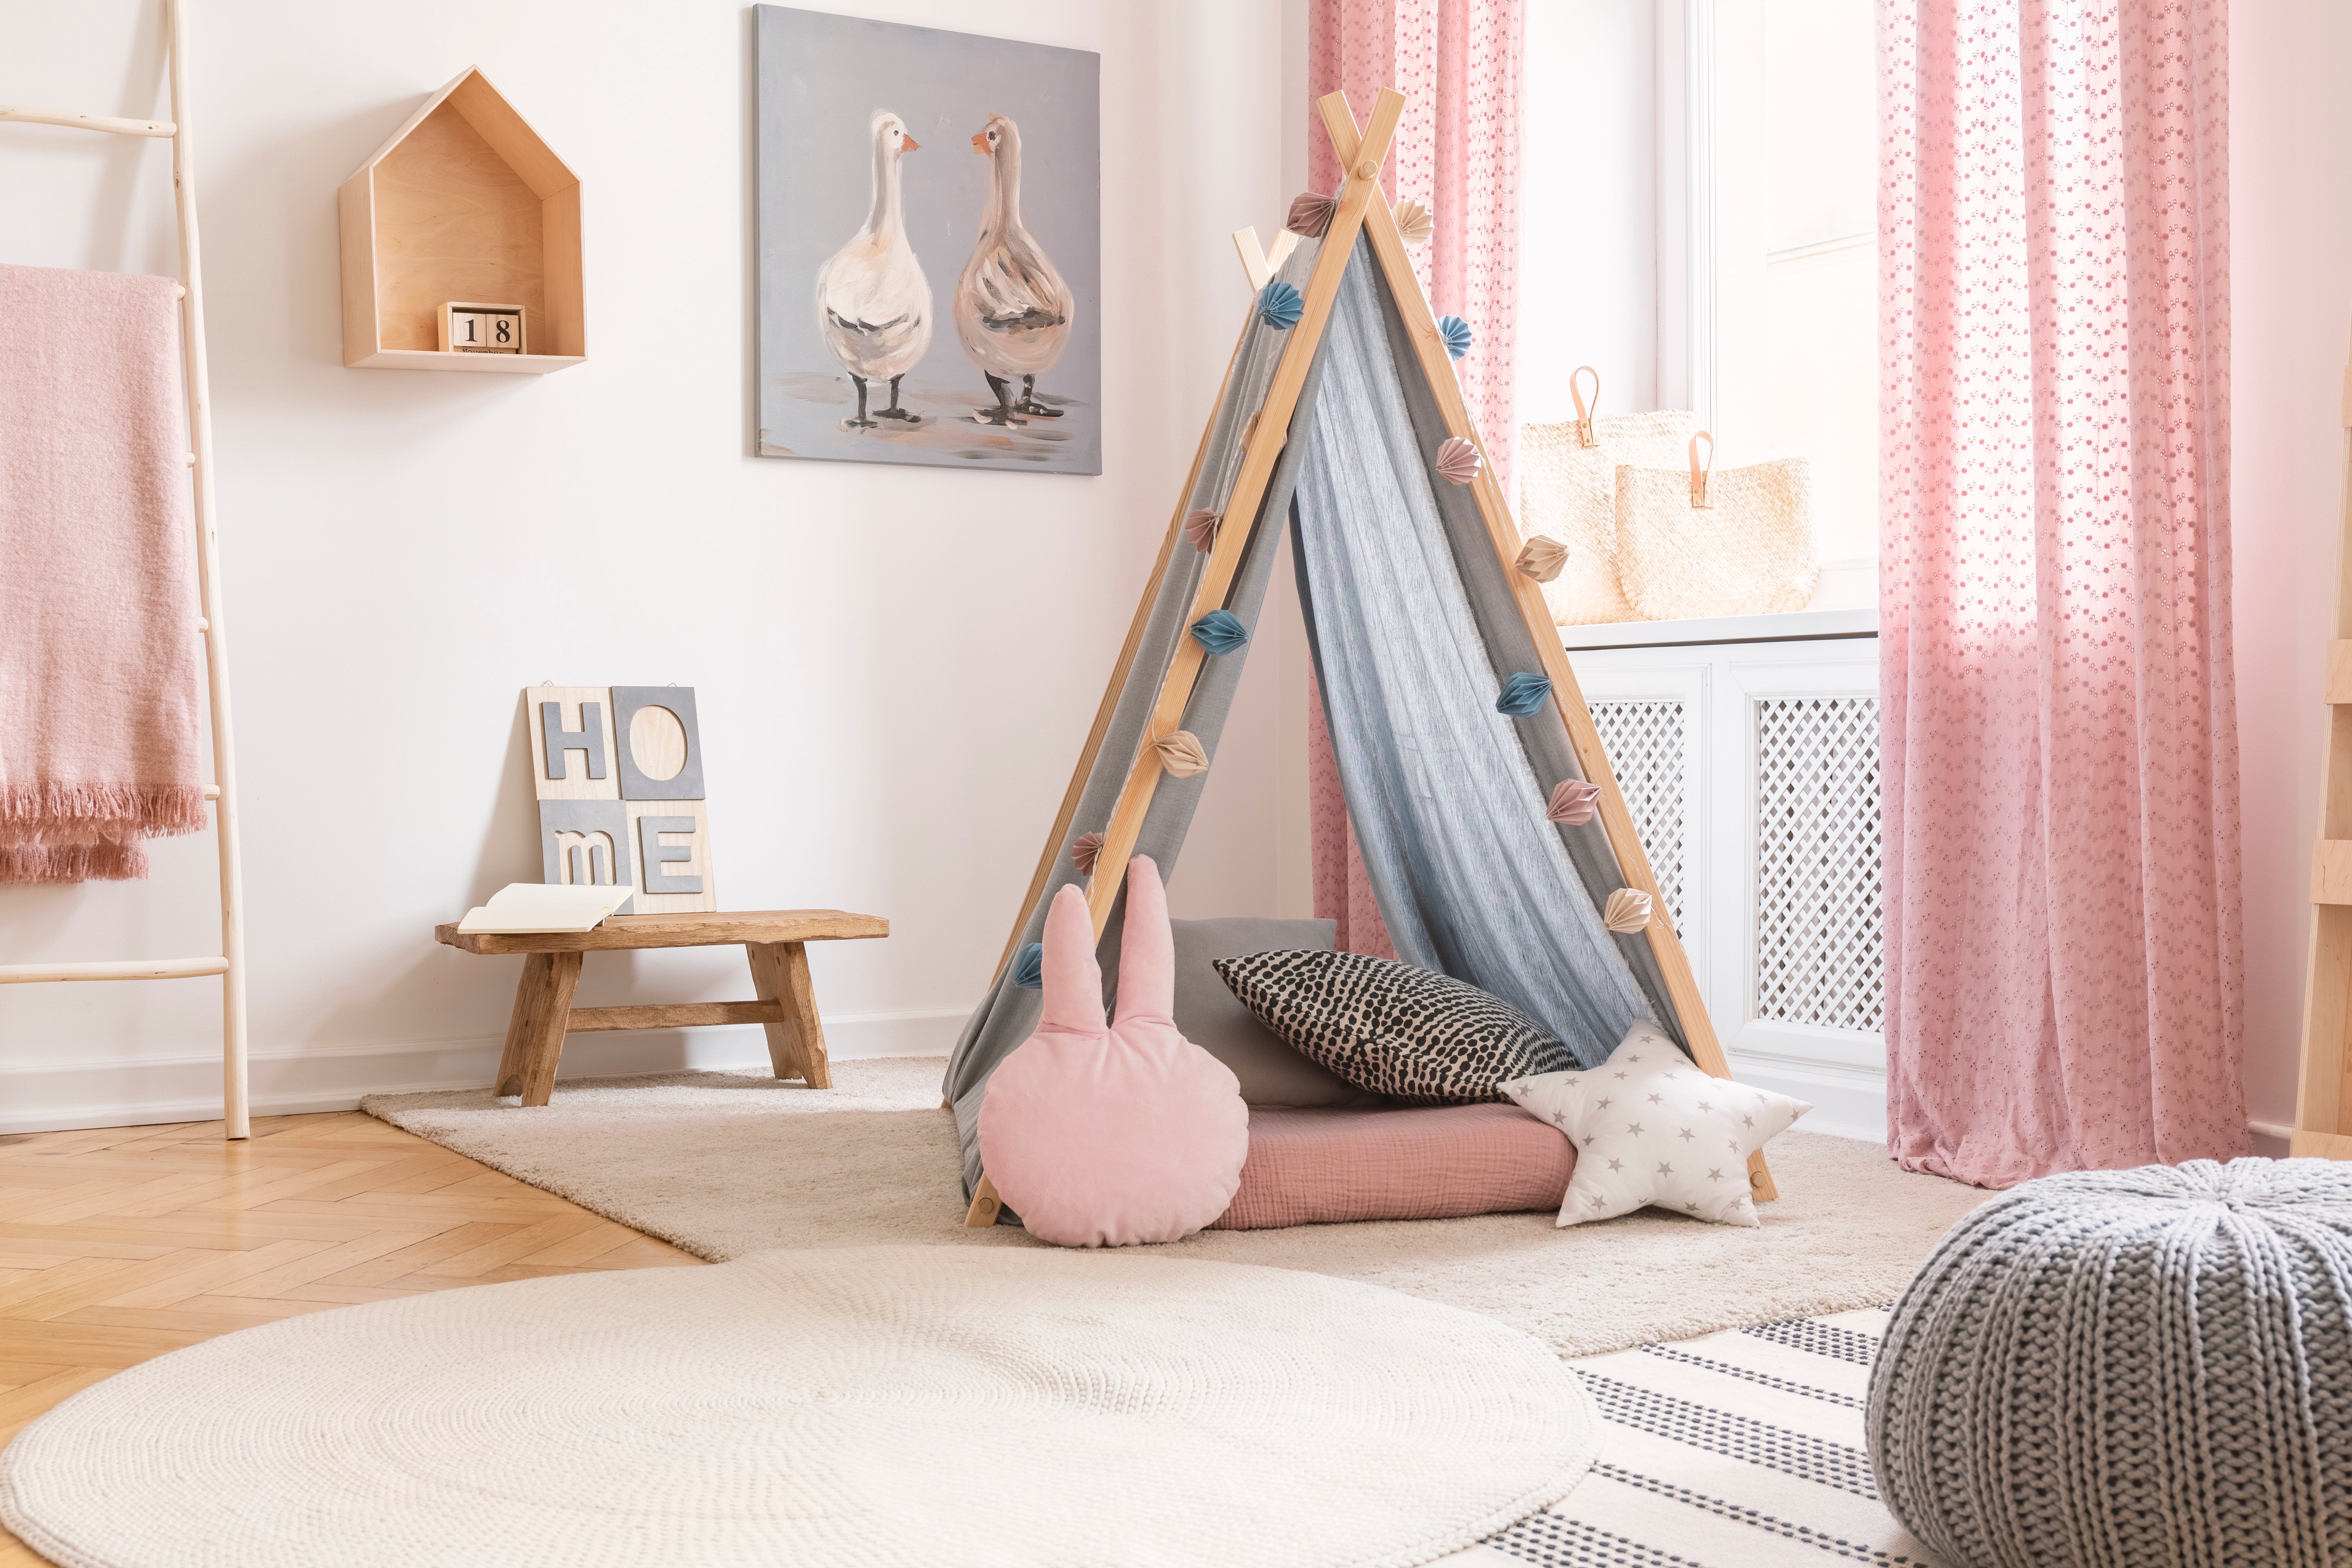 teepee designs for girls bedroom